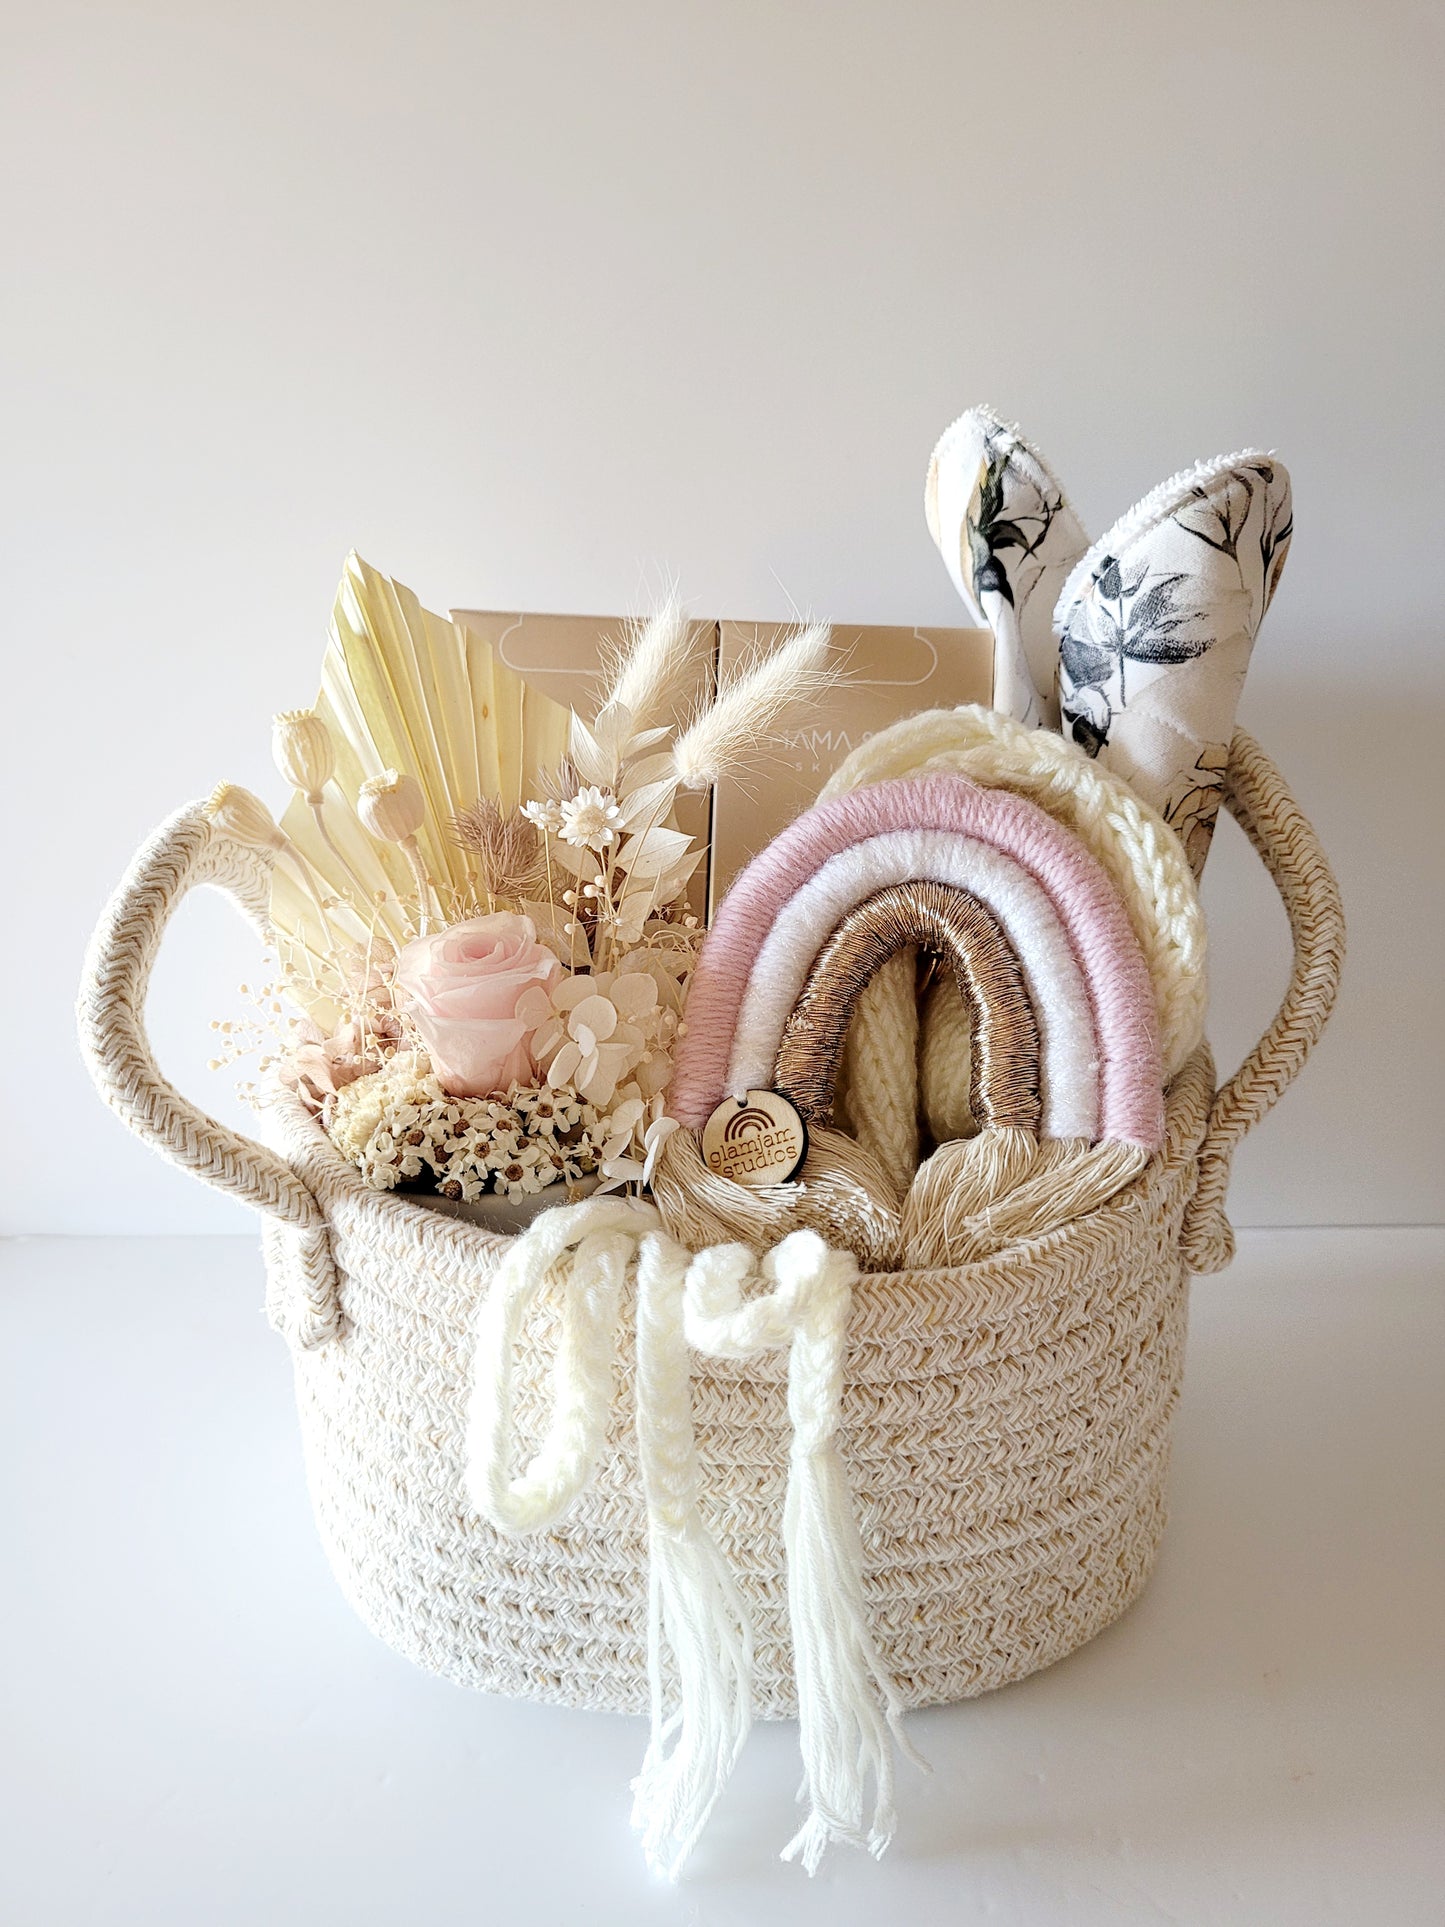 Precious Cargo gift basket